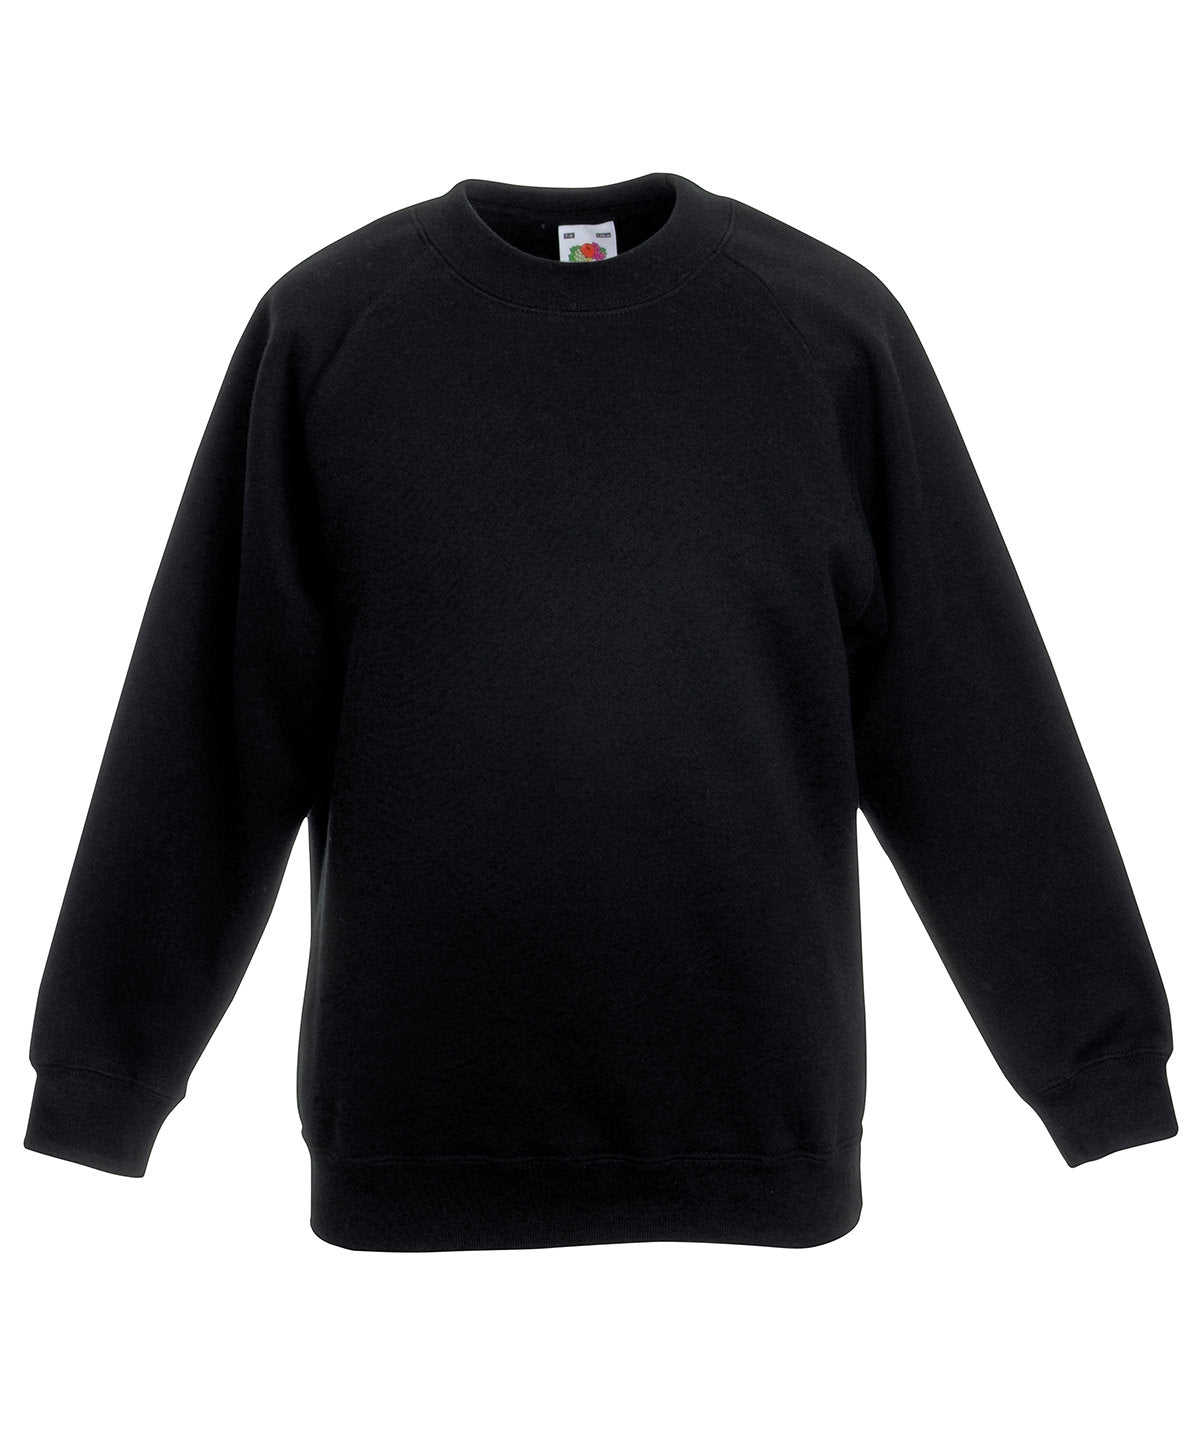 Kids classic raglan sweatshirt | Black